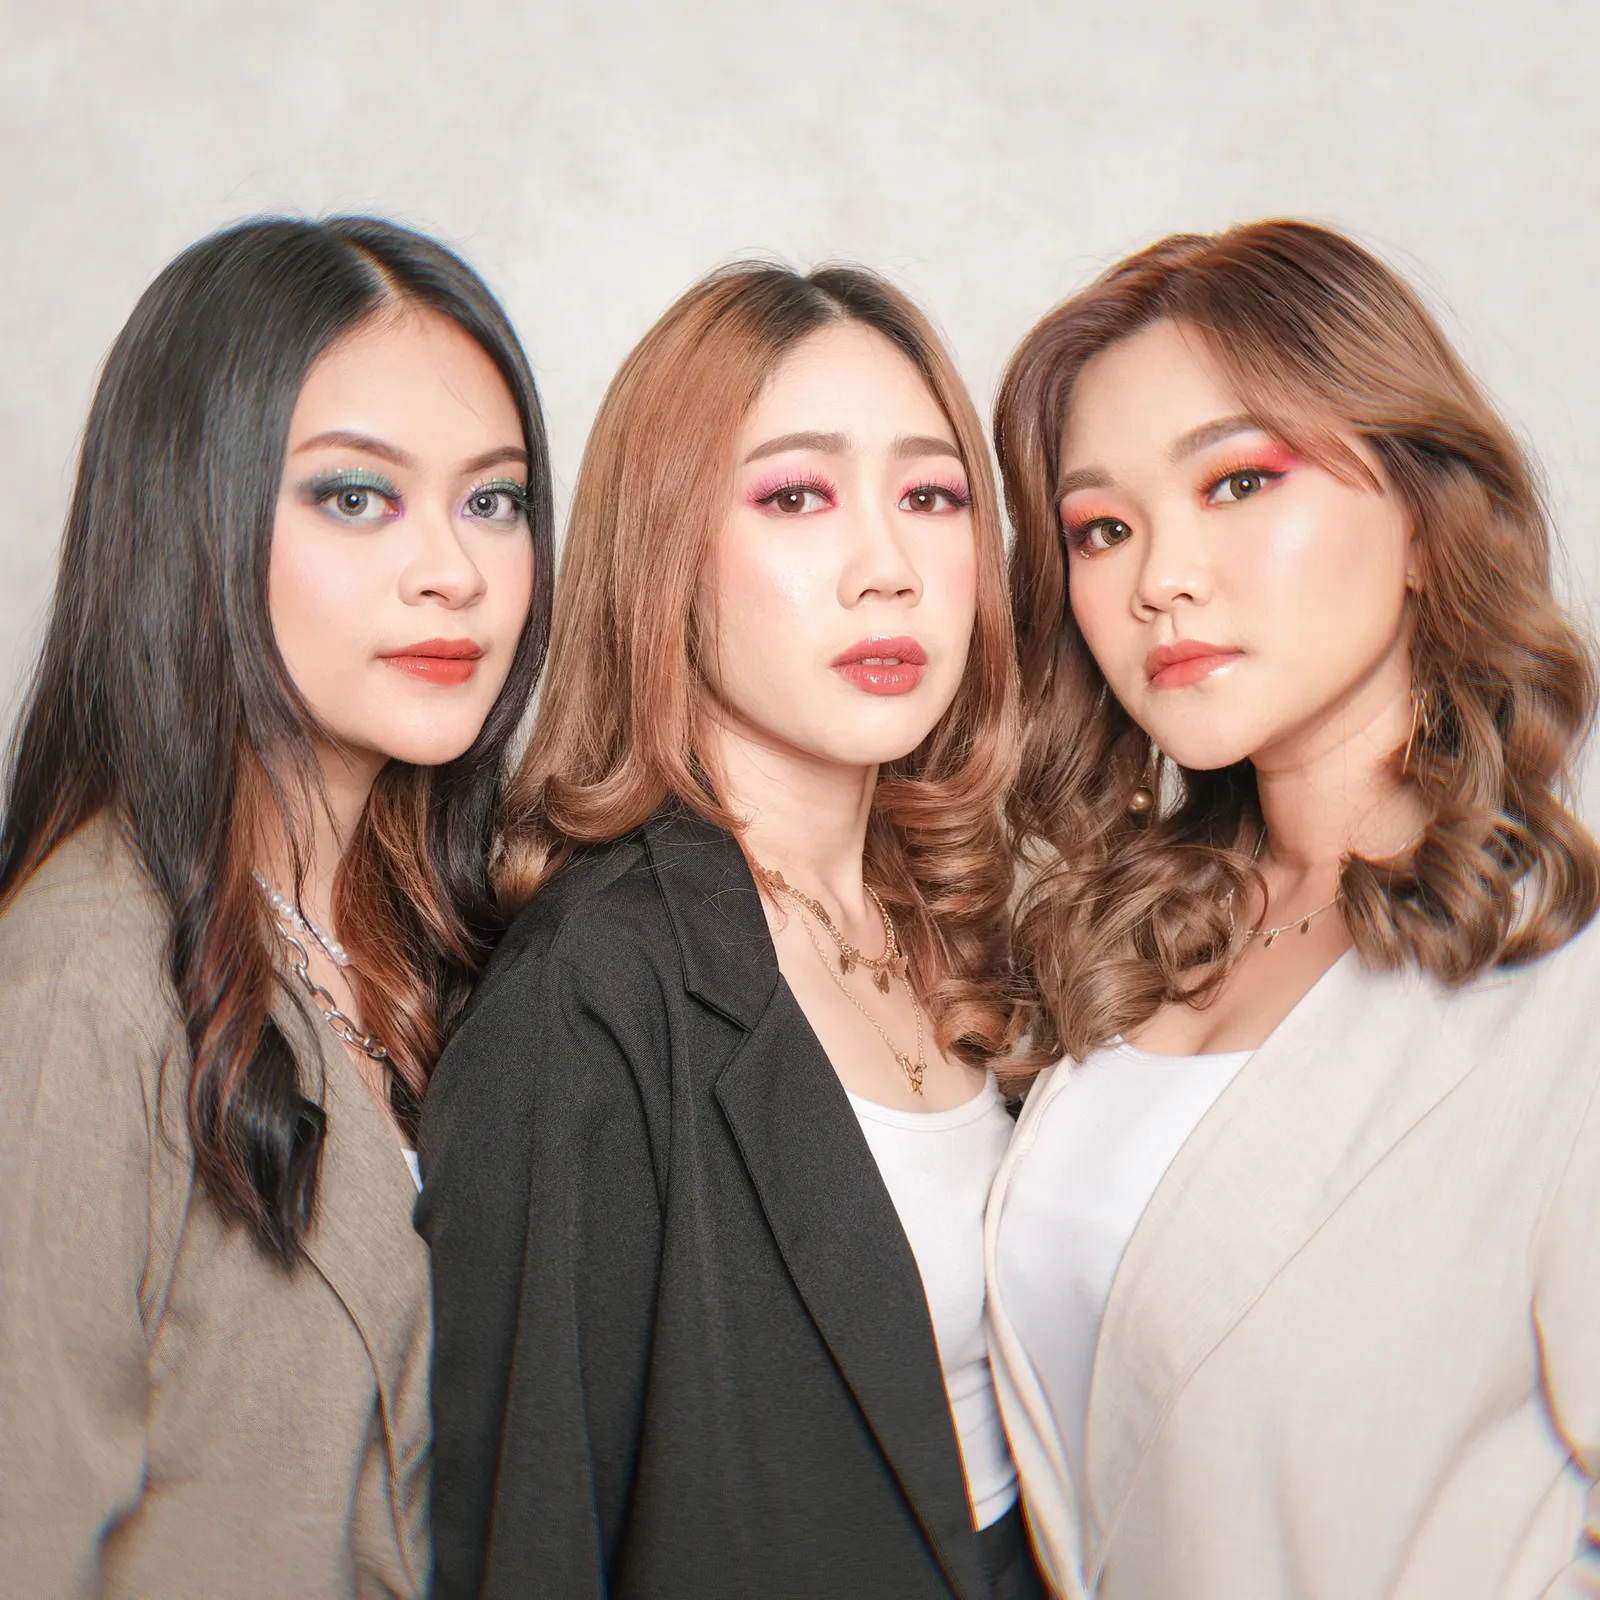 Ramaikan Blantika Musik, 5 Girl Group Indonesia Ini Patut Dilirik